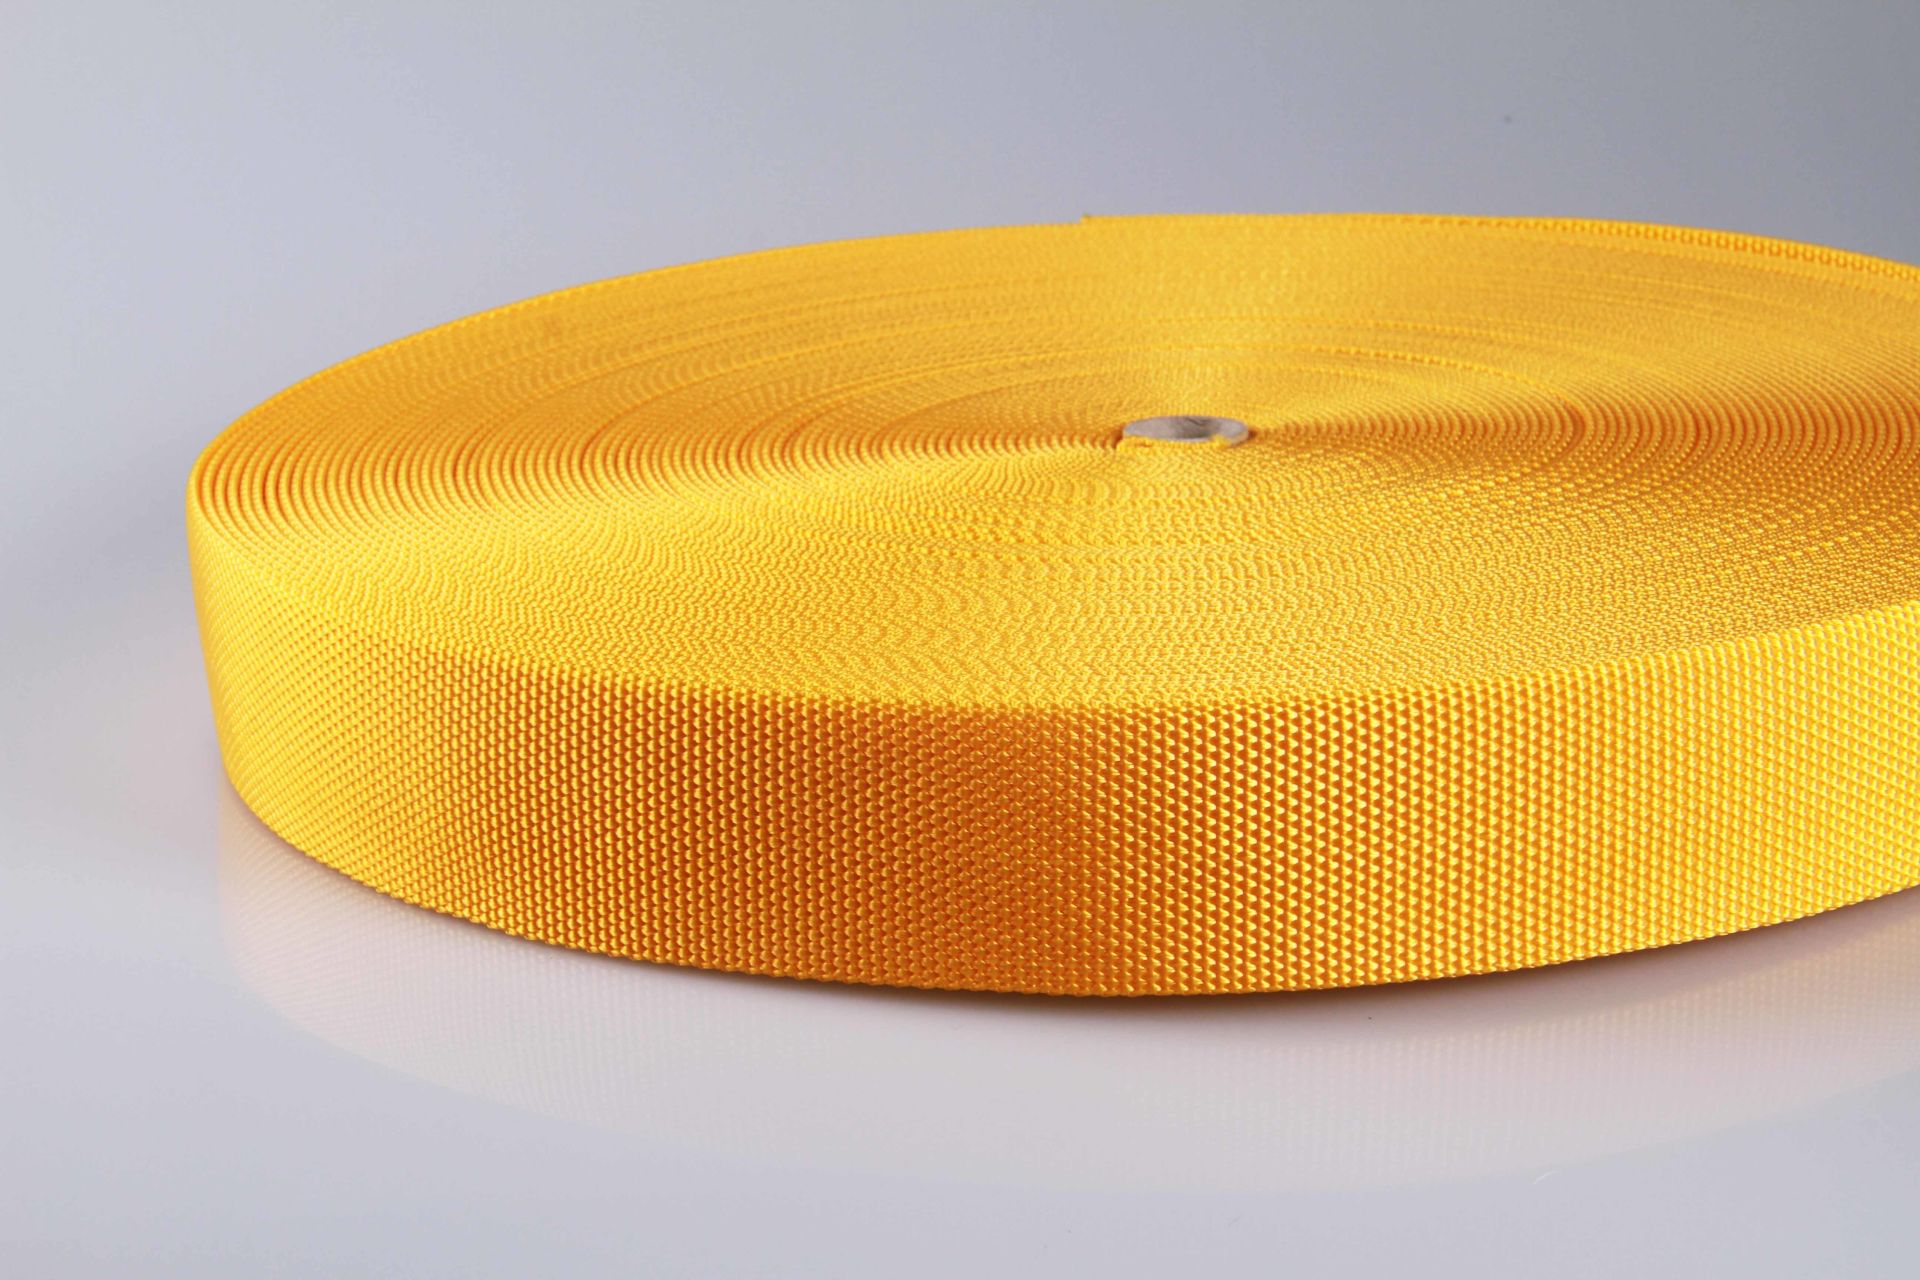 PP-Gurtband  -  Hohe Reißfestigkeit - 1.200 daN/kg  -  Breite 50 mm  -  Stärke 2,1 mm  -  50 mtr. Rolle  -  gelb